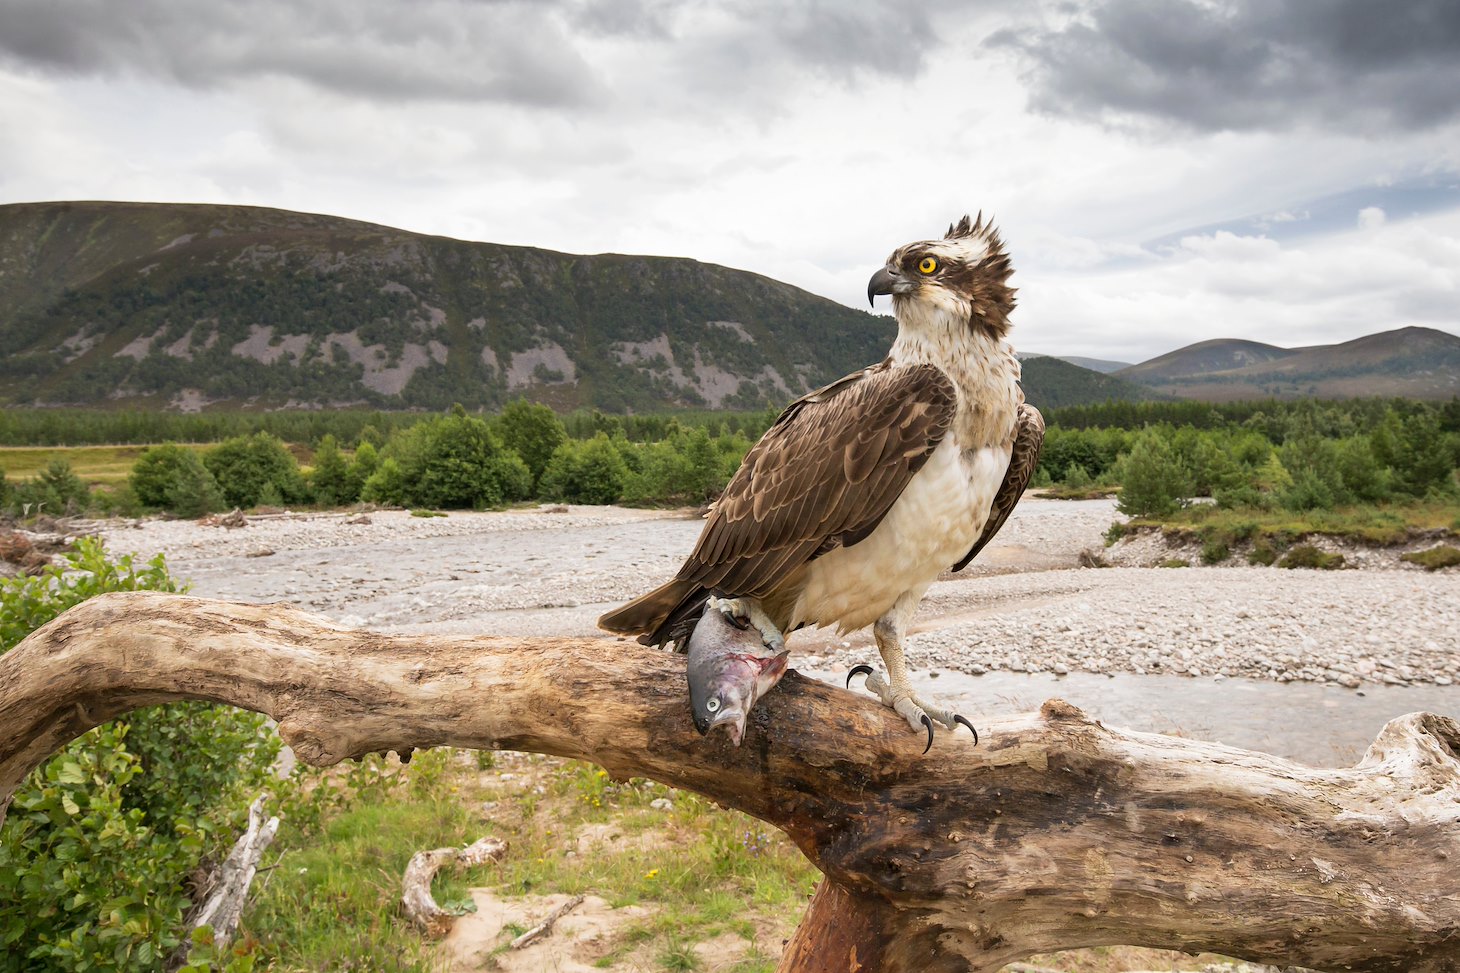 Osprey (Pandion haliaetus) perched with fish - wide angle to show habitat - Glenfeshie, Scotland.